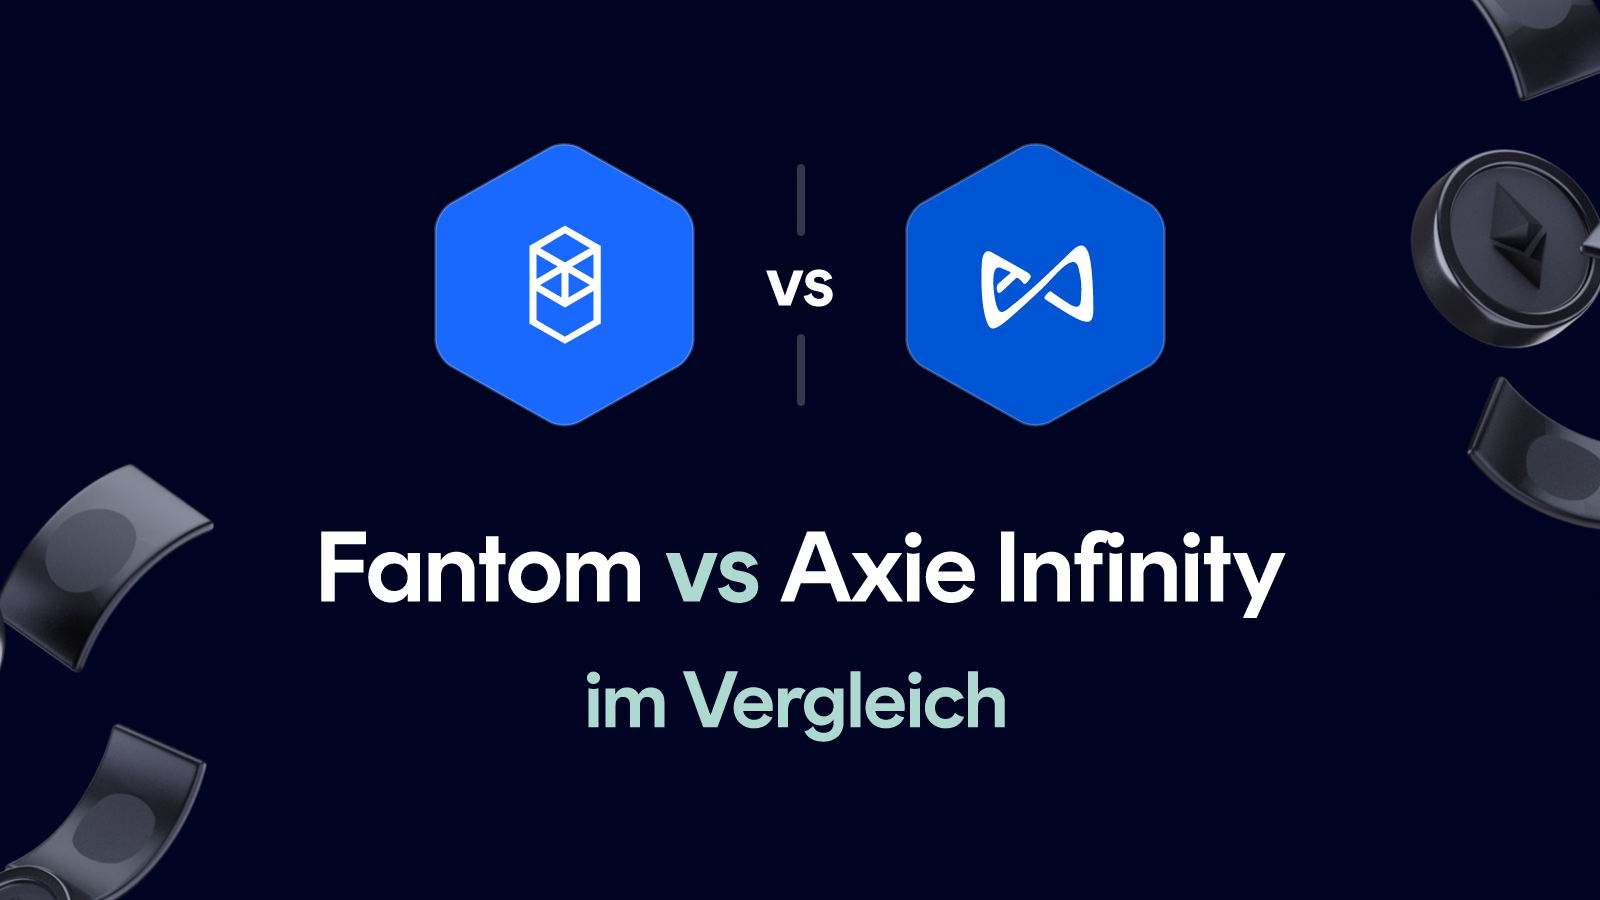 Fantom vs Axie Infinity